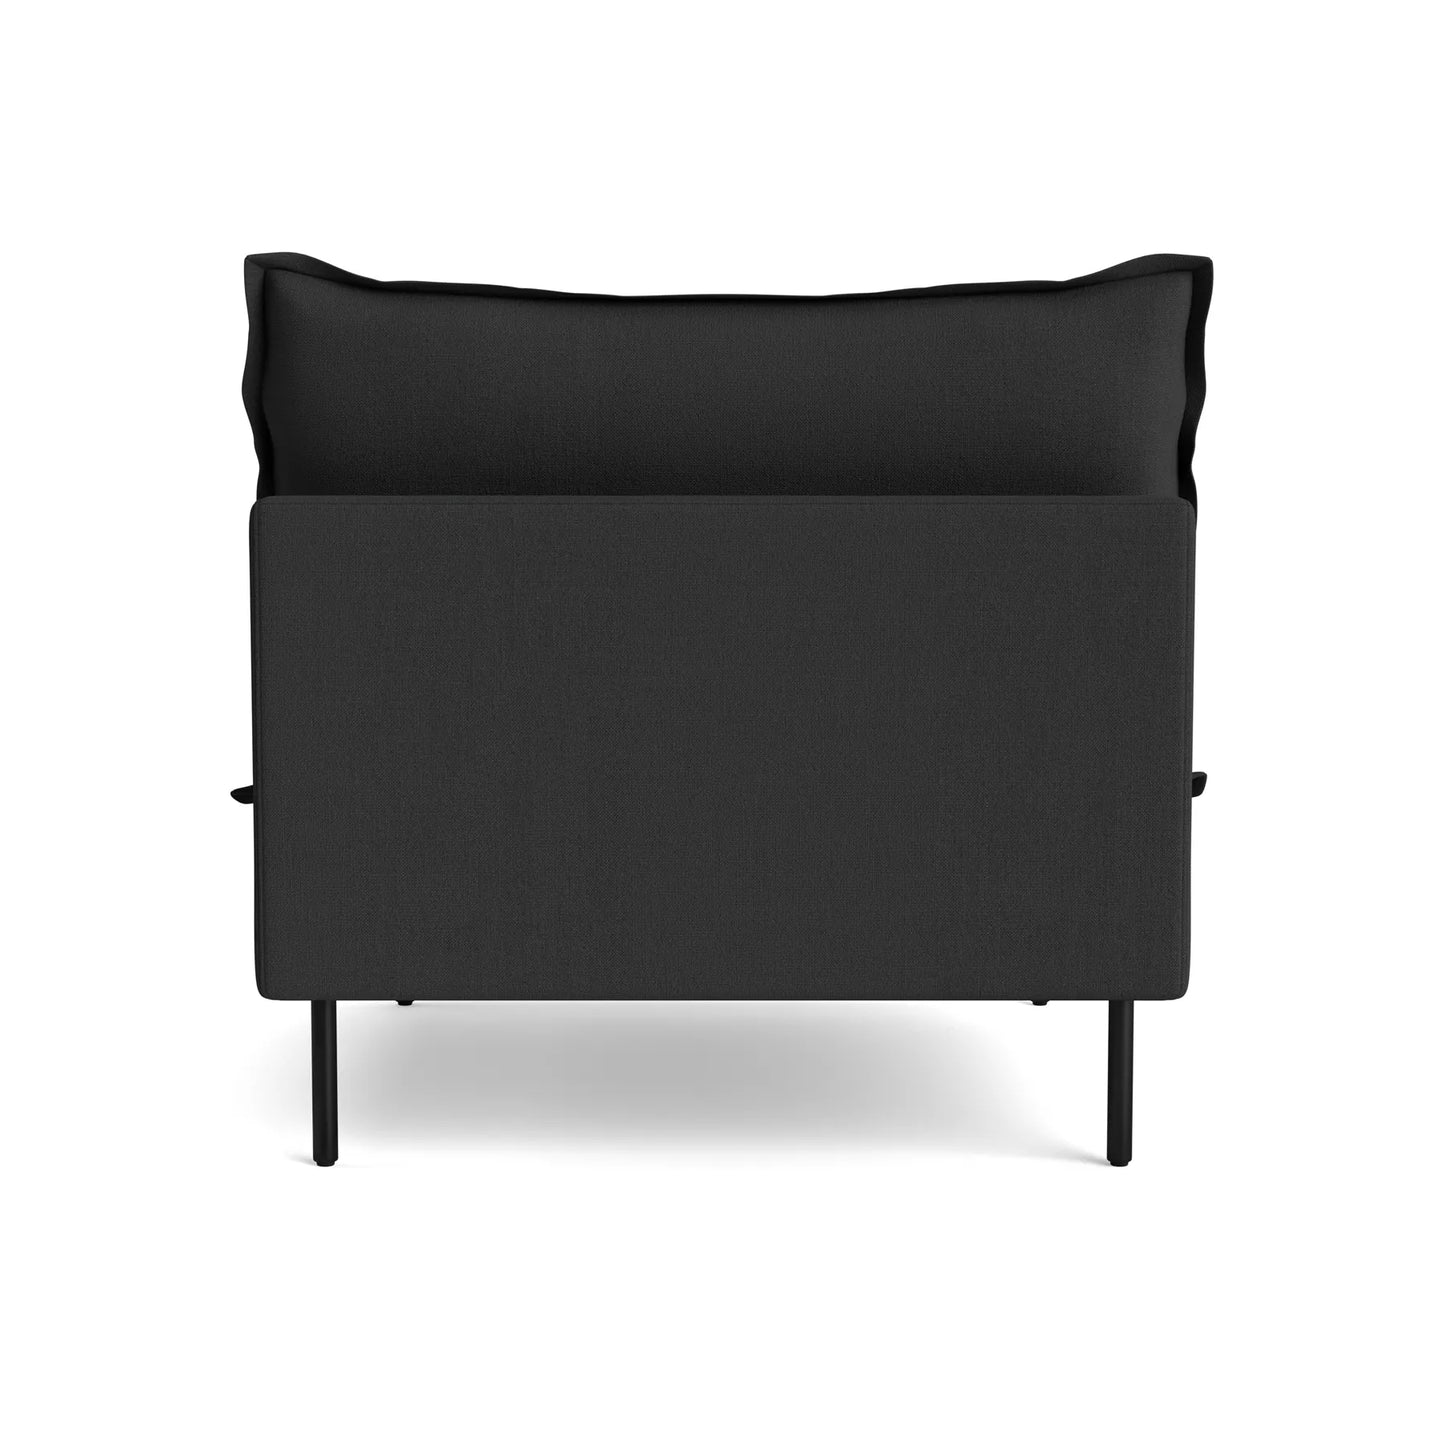 Seam Sofa Middle Module - Siena Charcoal